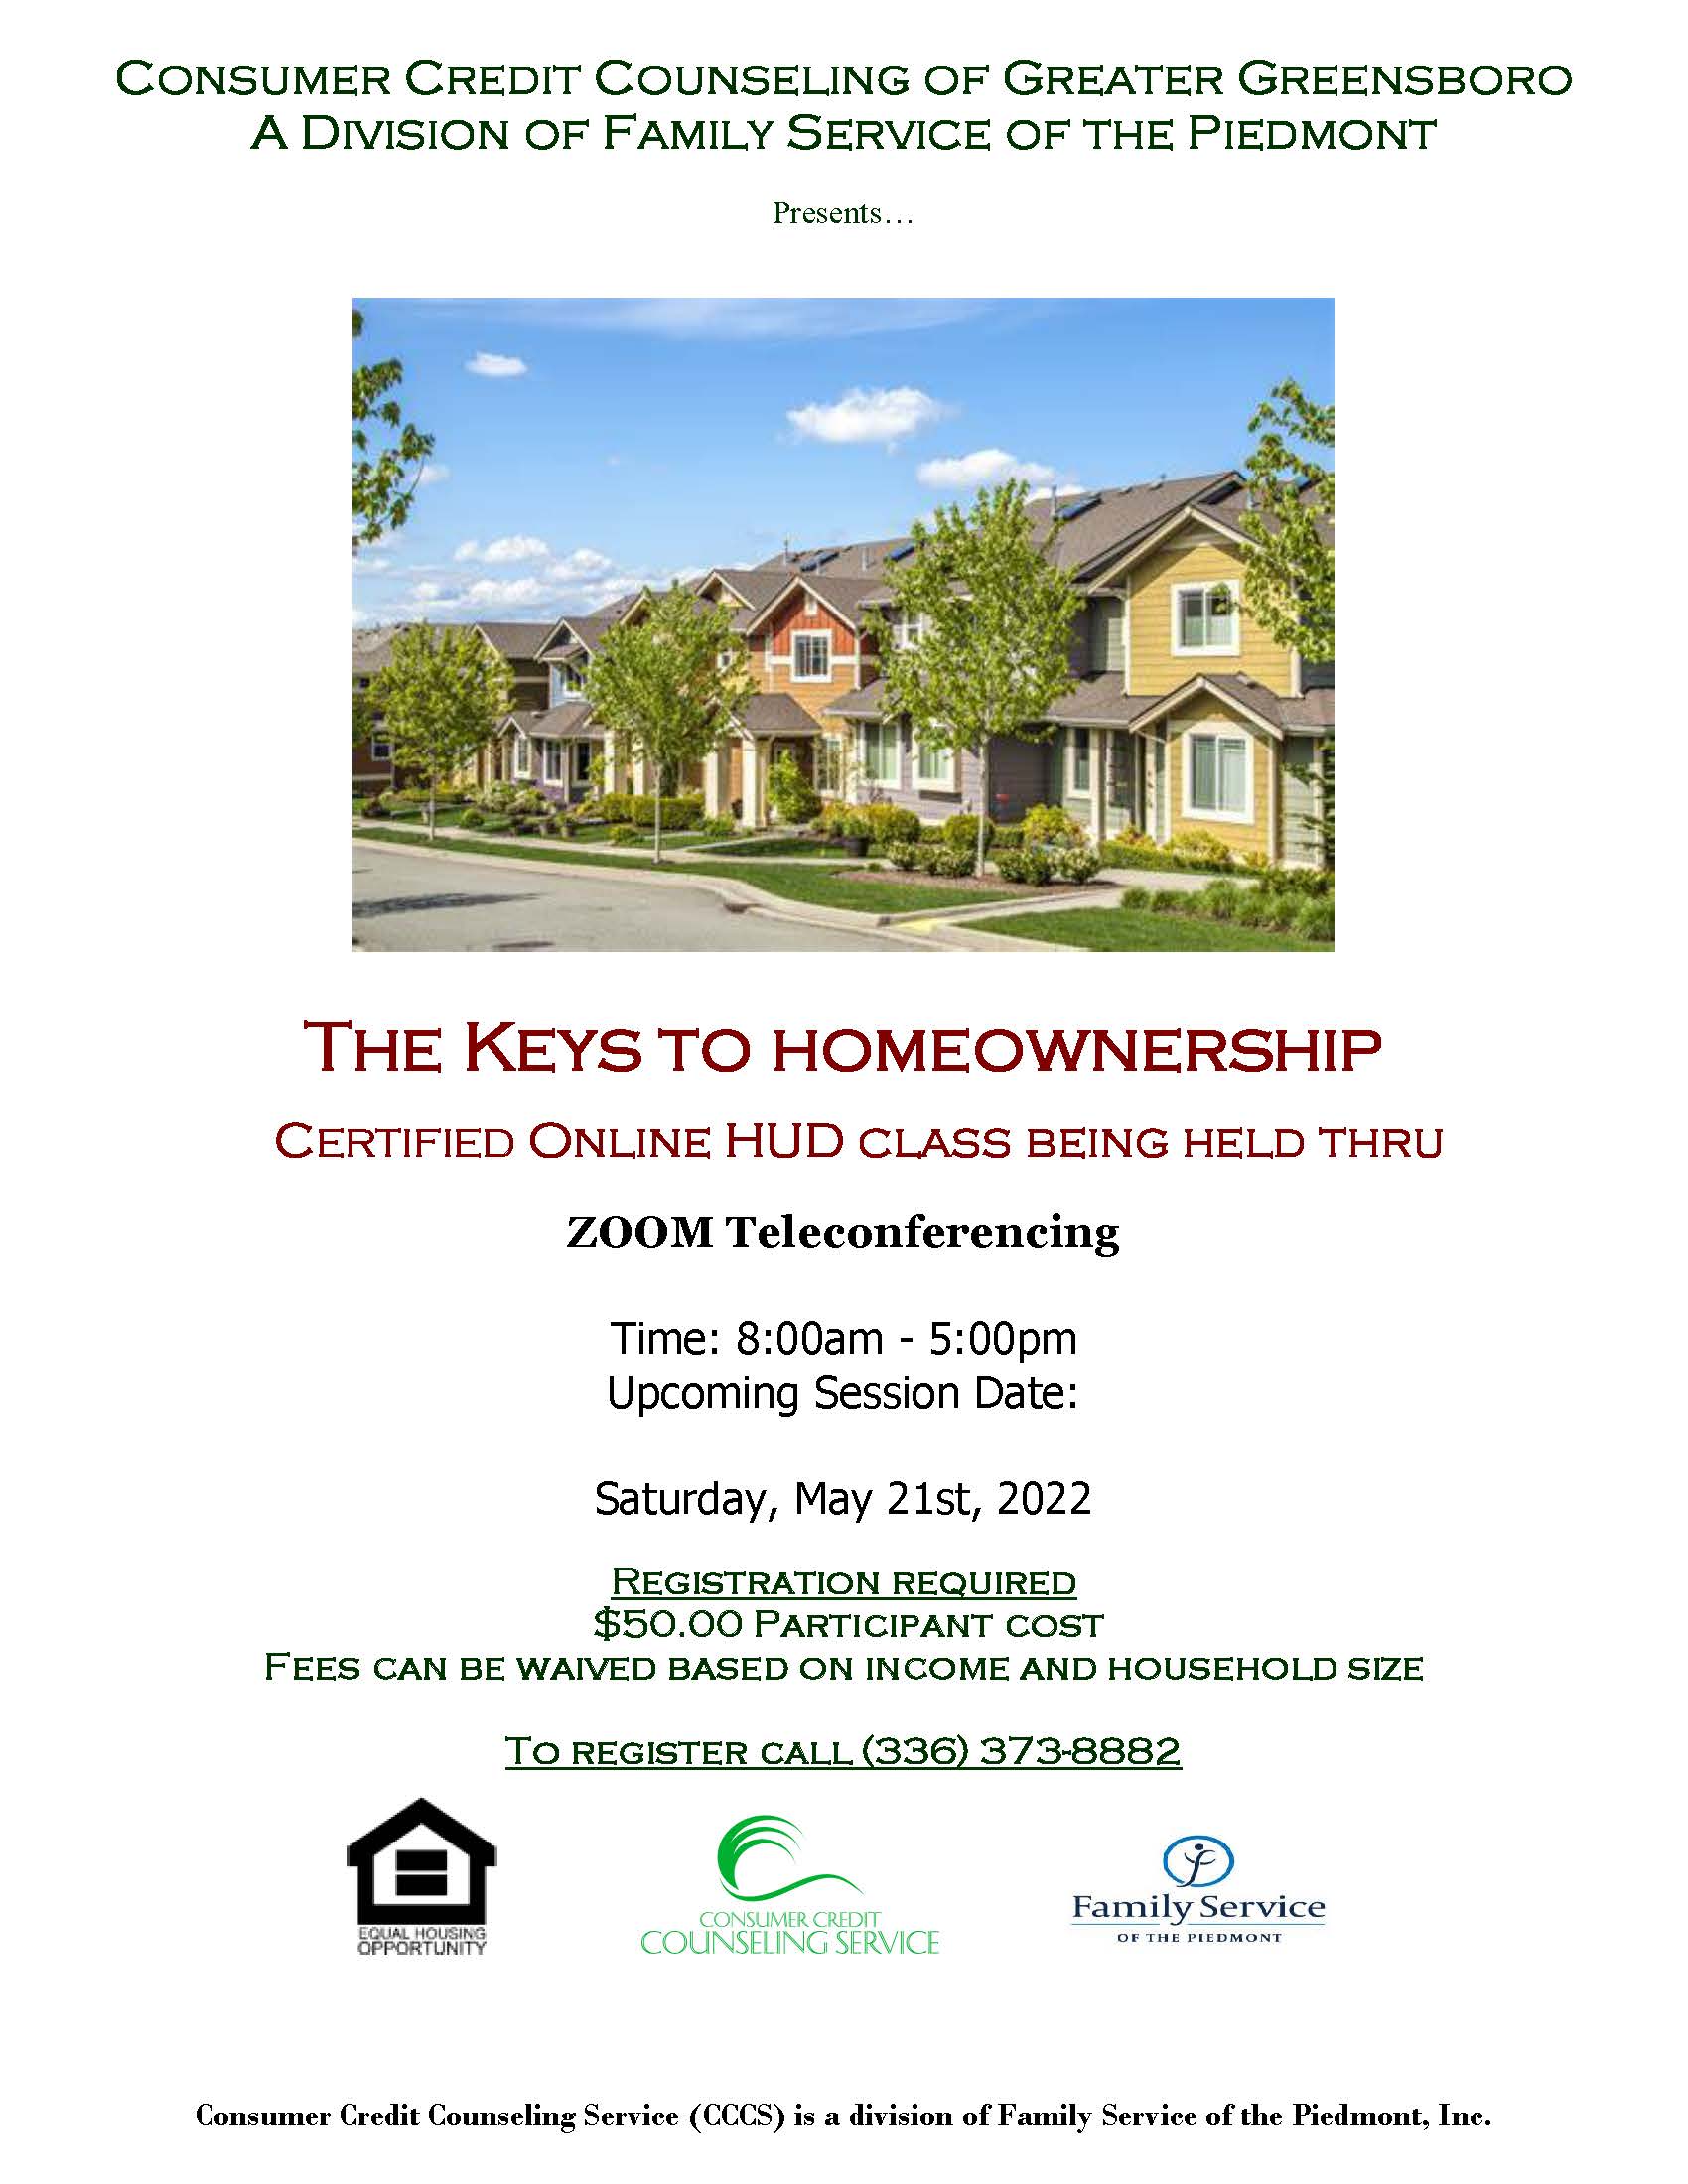 Keys to Homeownership Workshop flyer